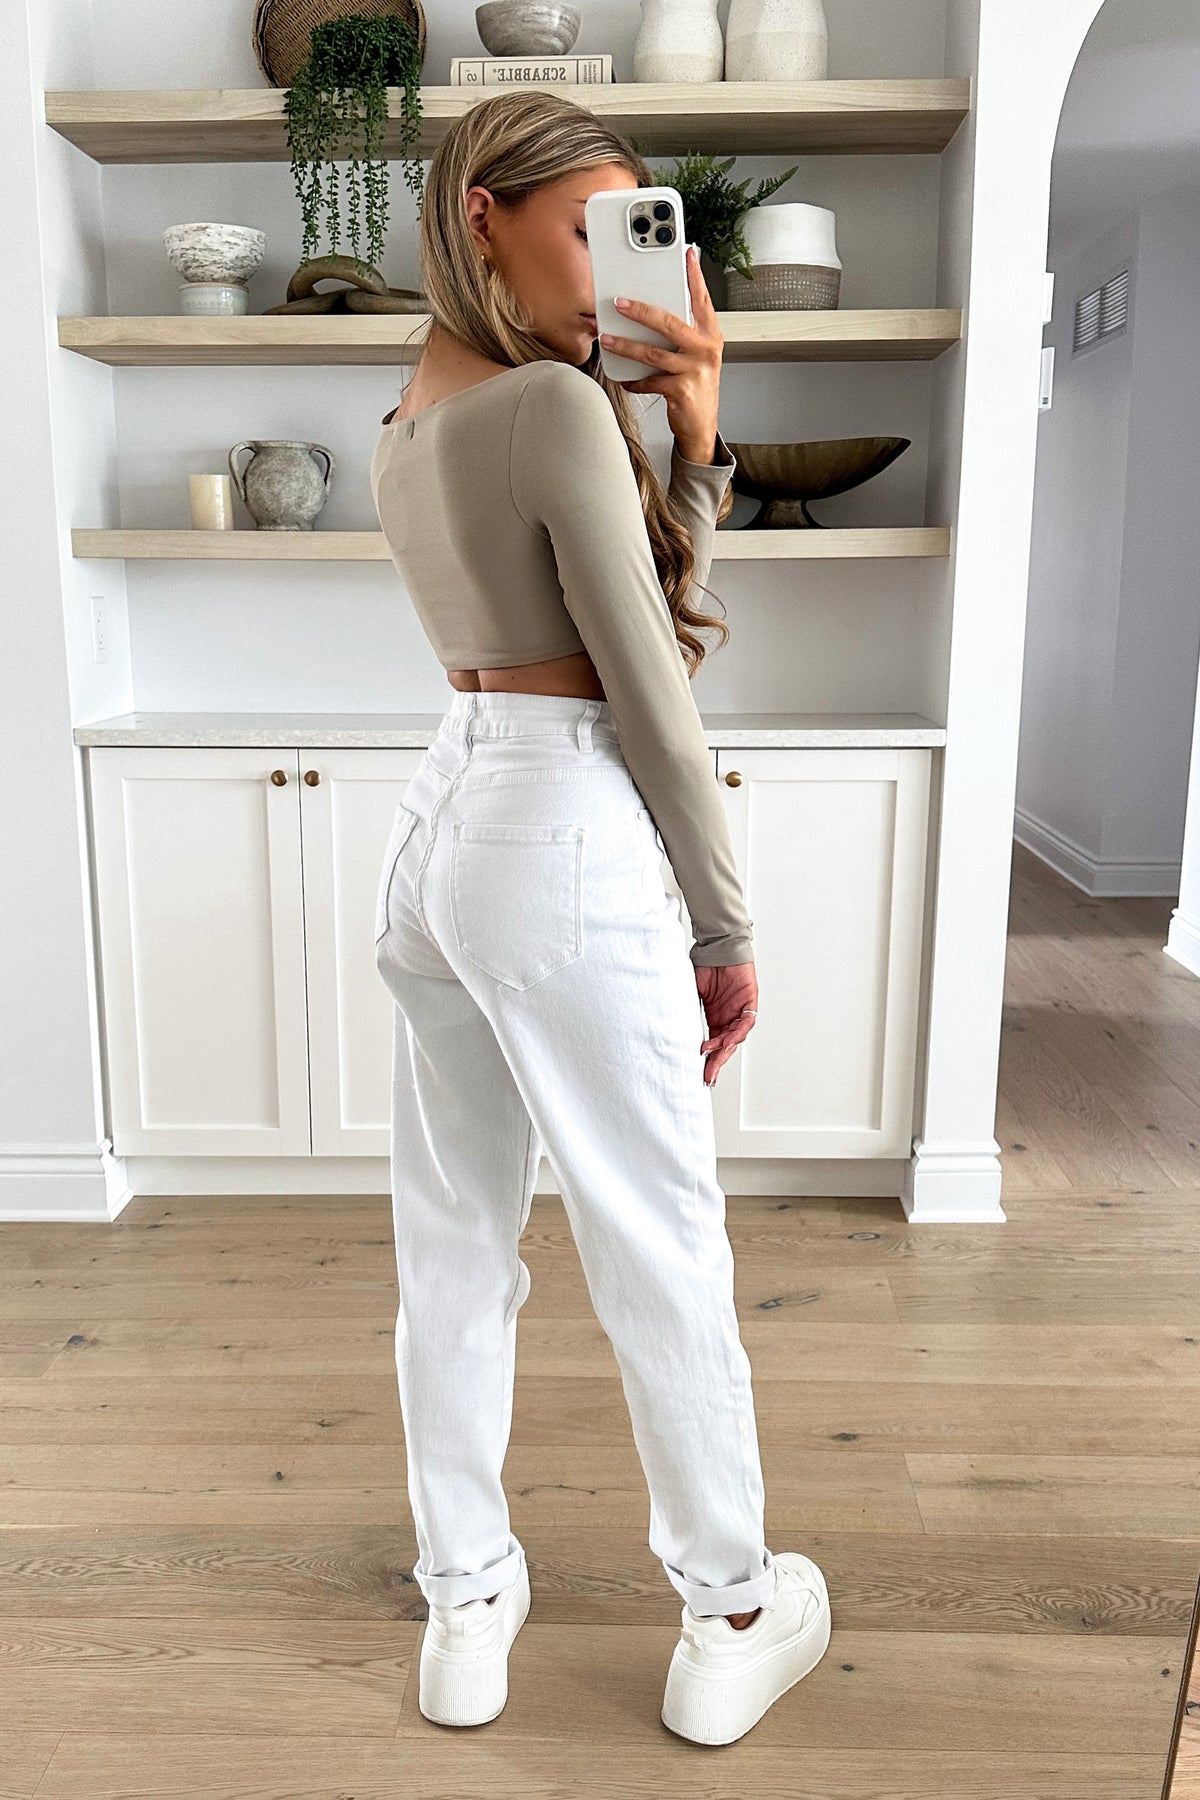 SOUTHERN - White Jeans